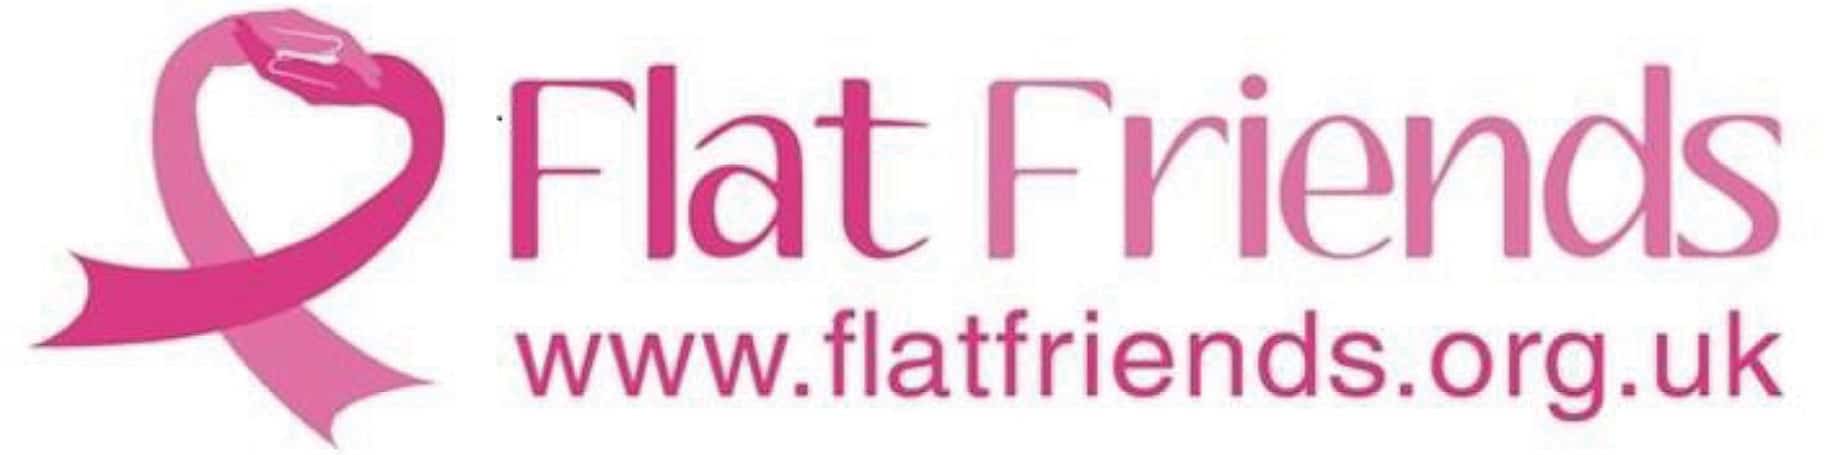 flatter friends charity logo